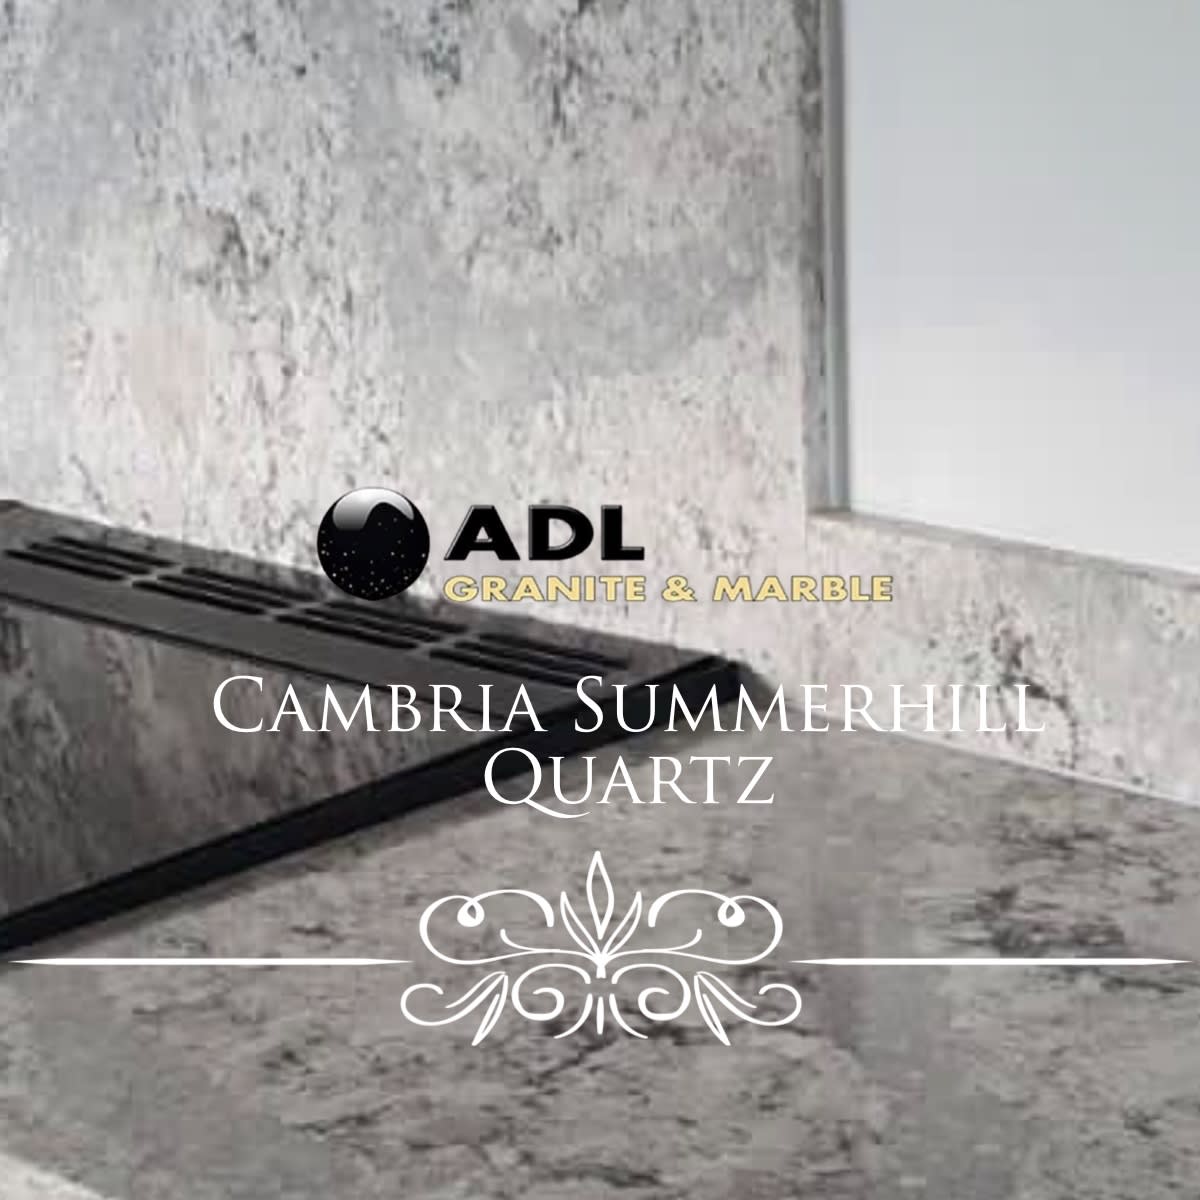 Images ADL Granite & Marble Ltd